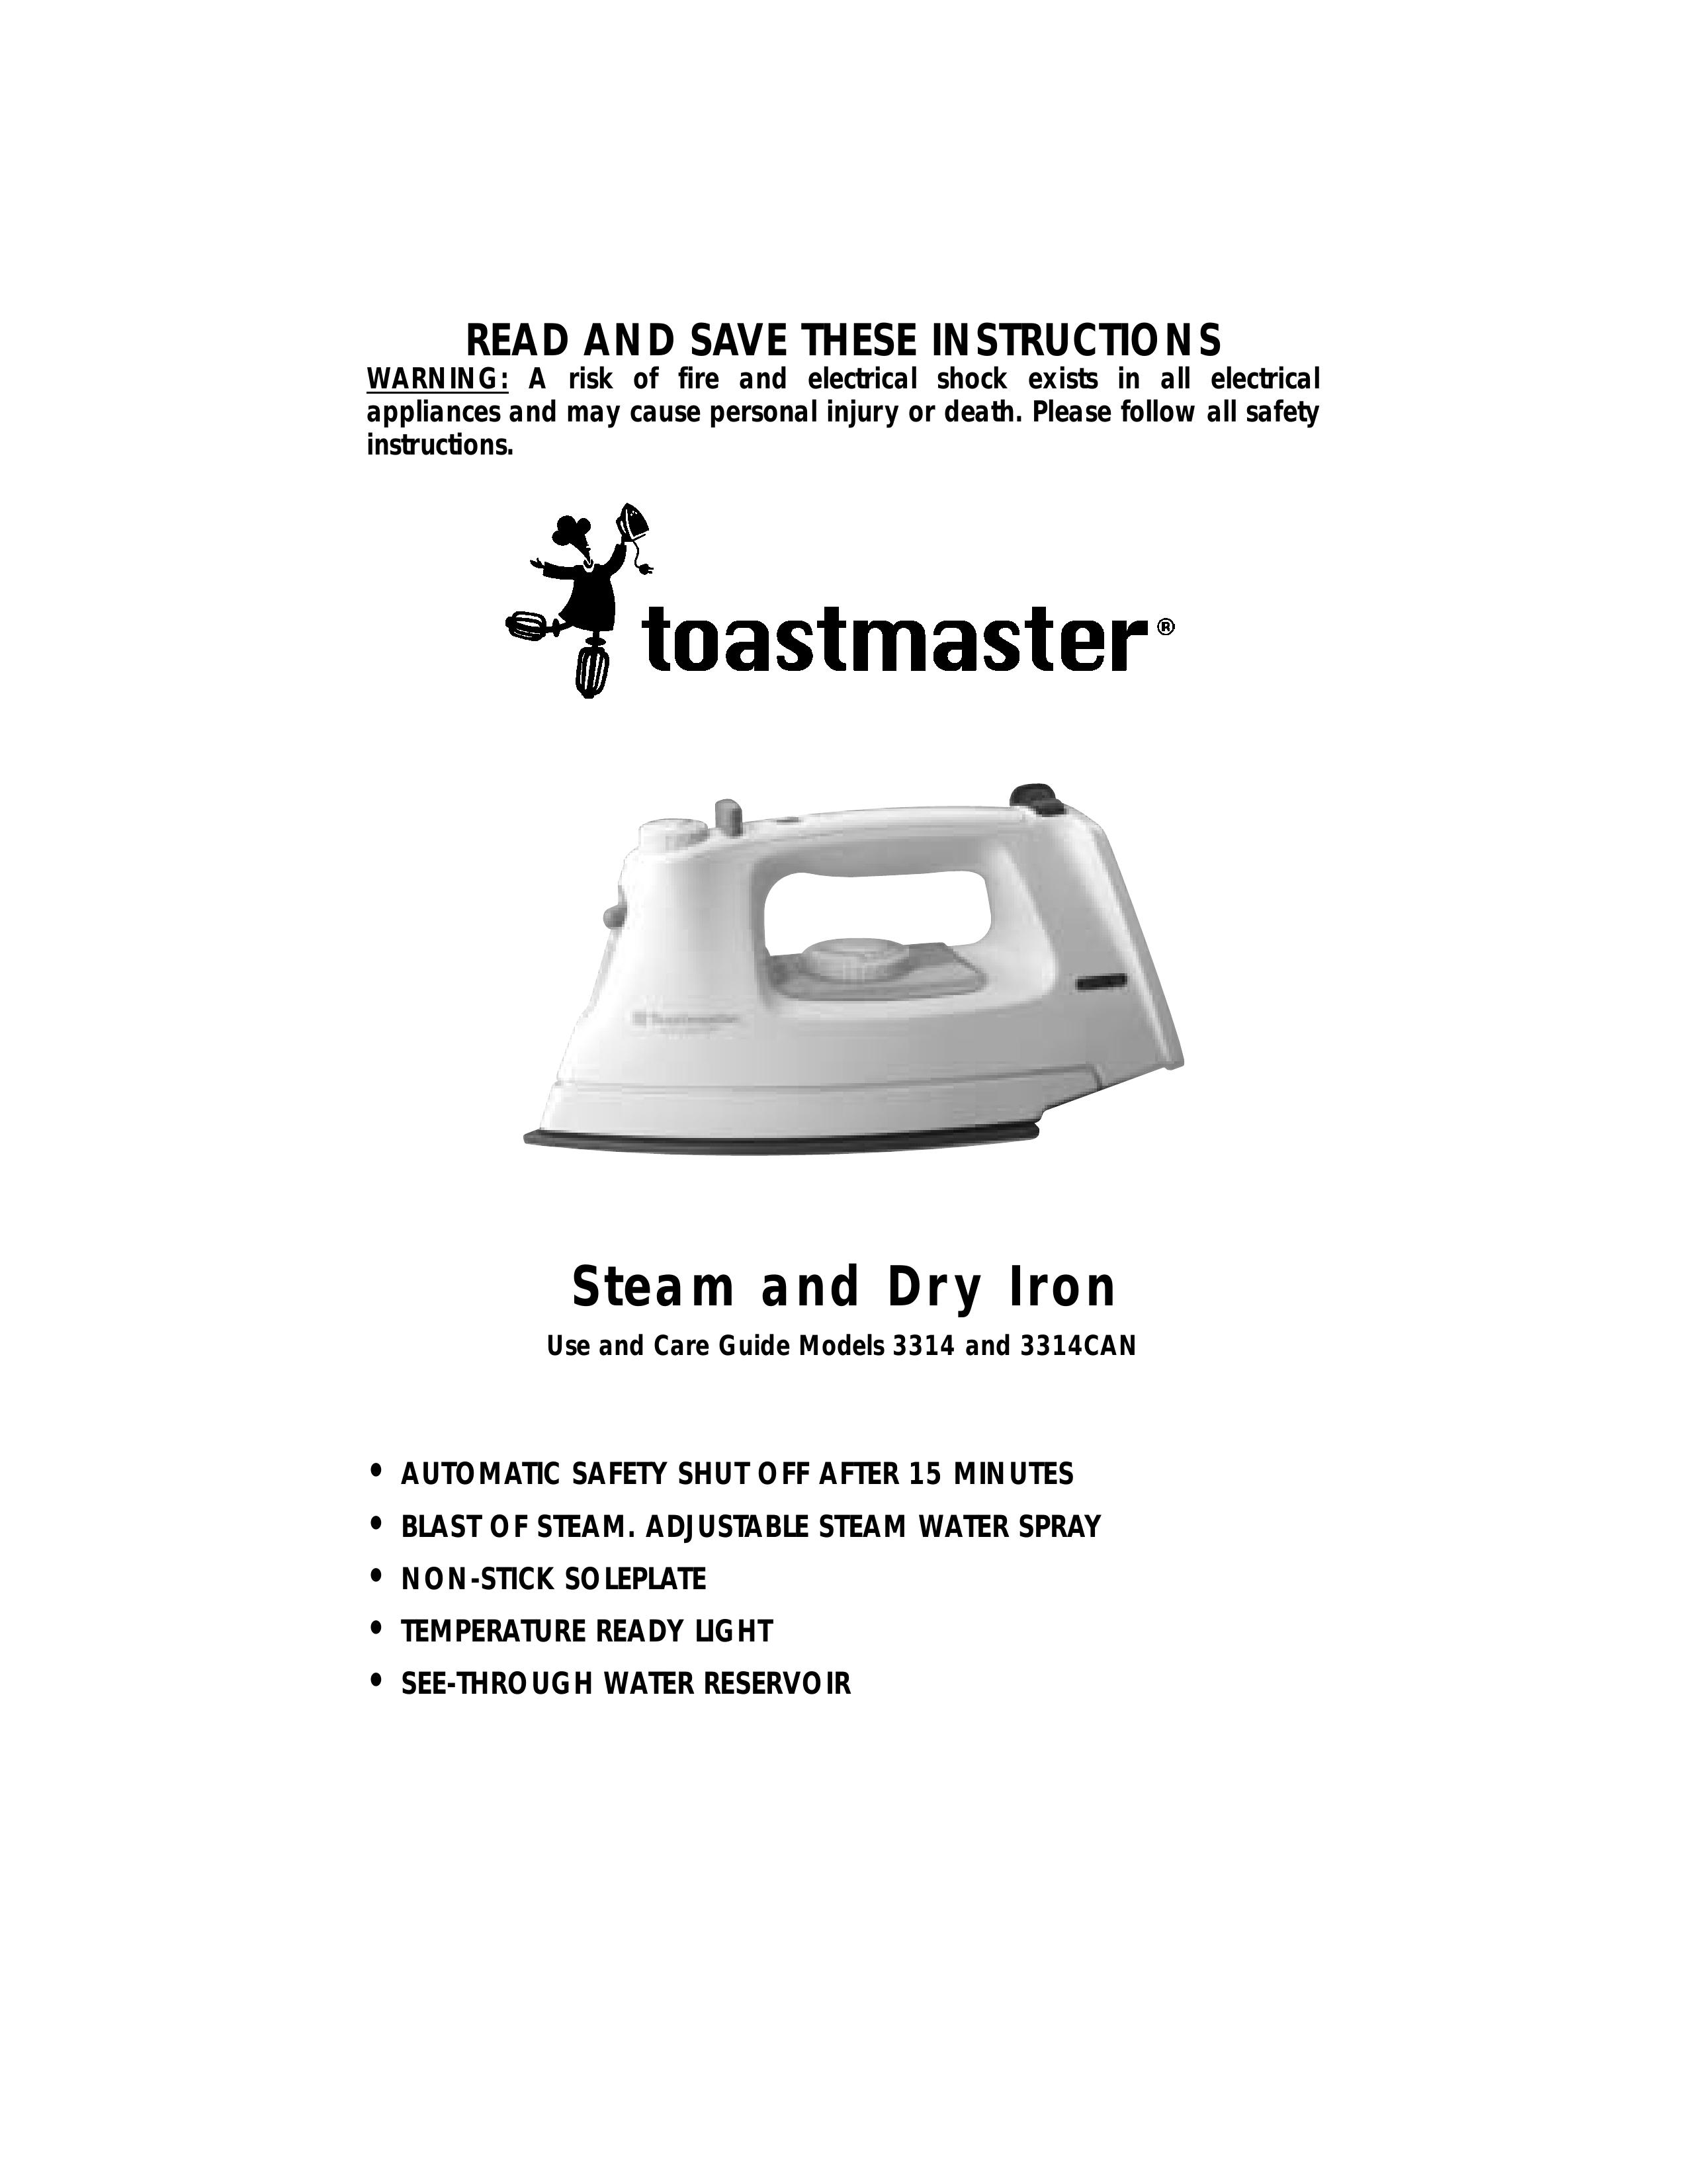 Toastmaster 3314 Iron User Manual